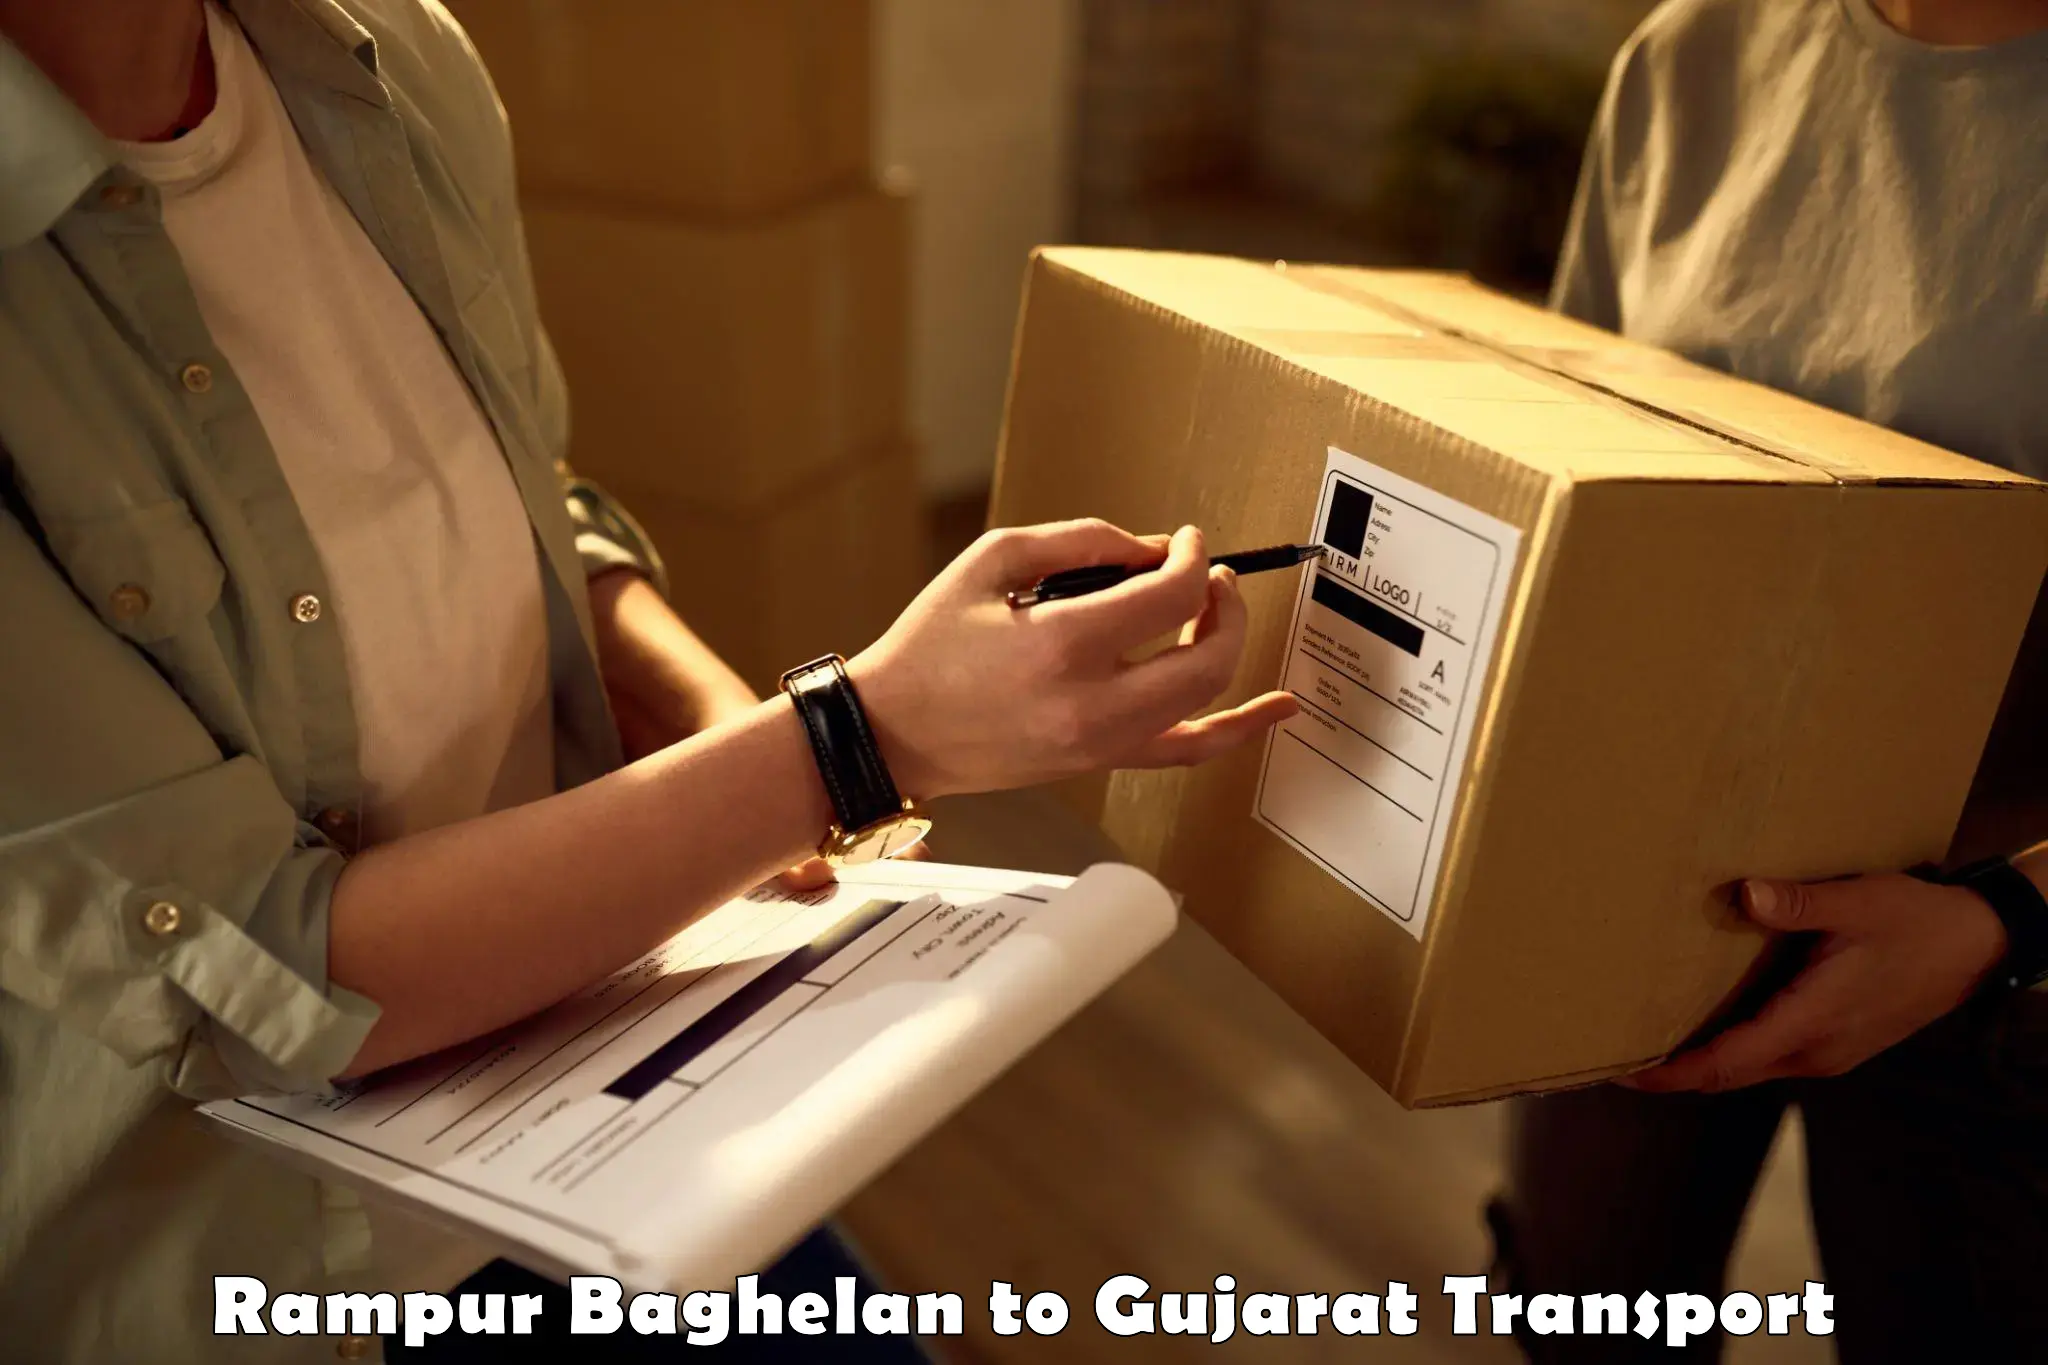 Transport in sharing Rampur Baghelan to Mahuva